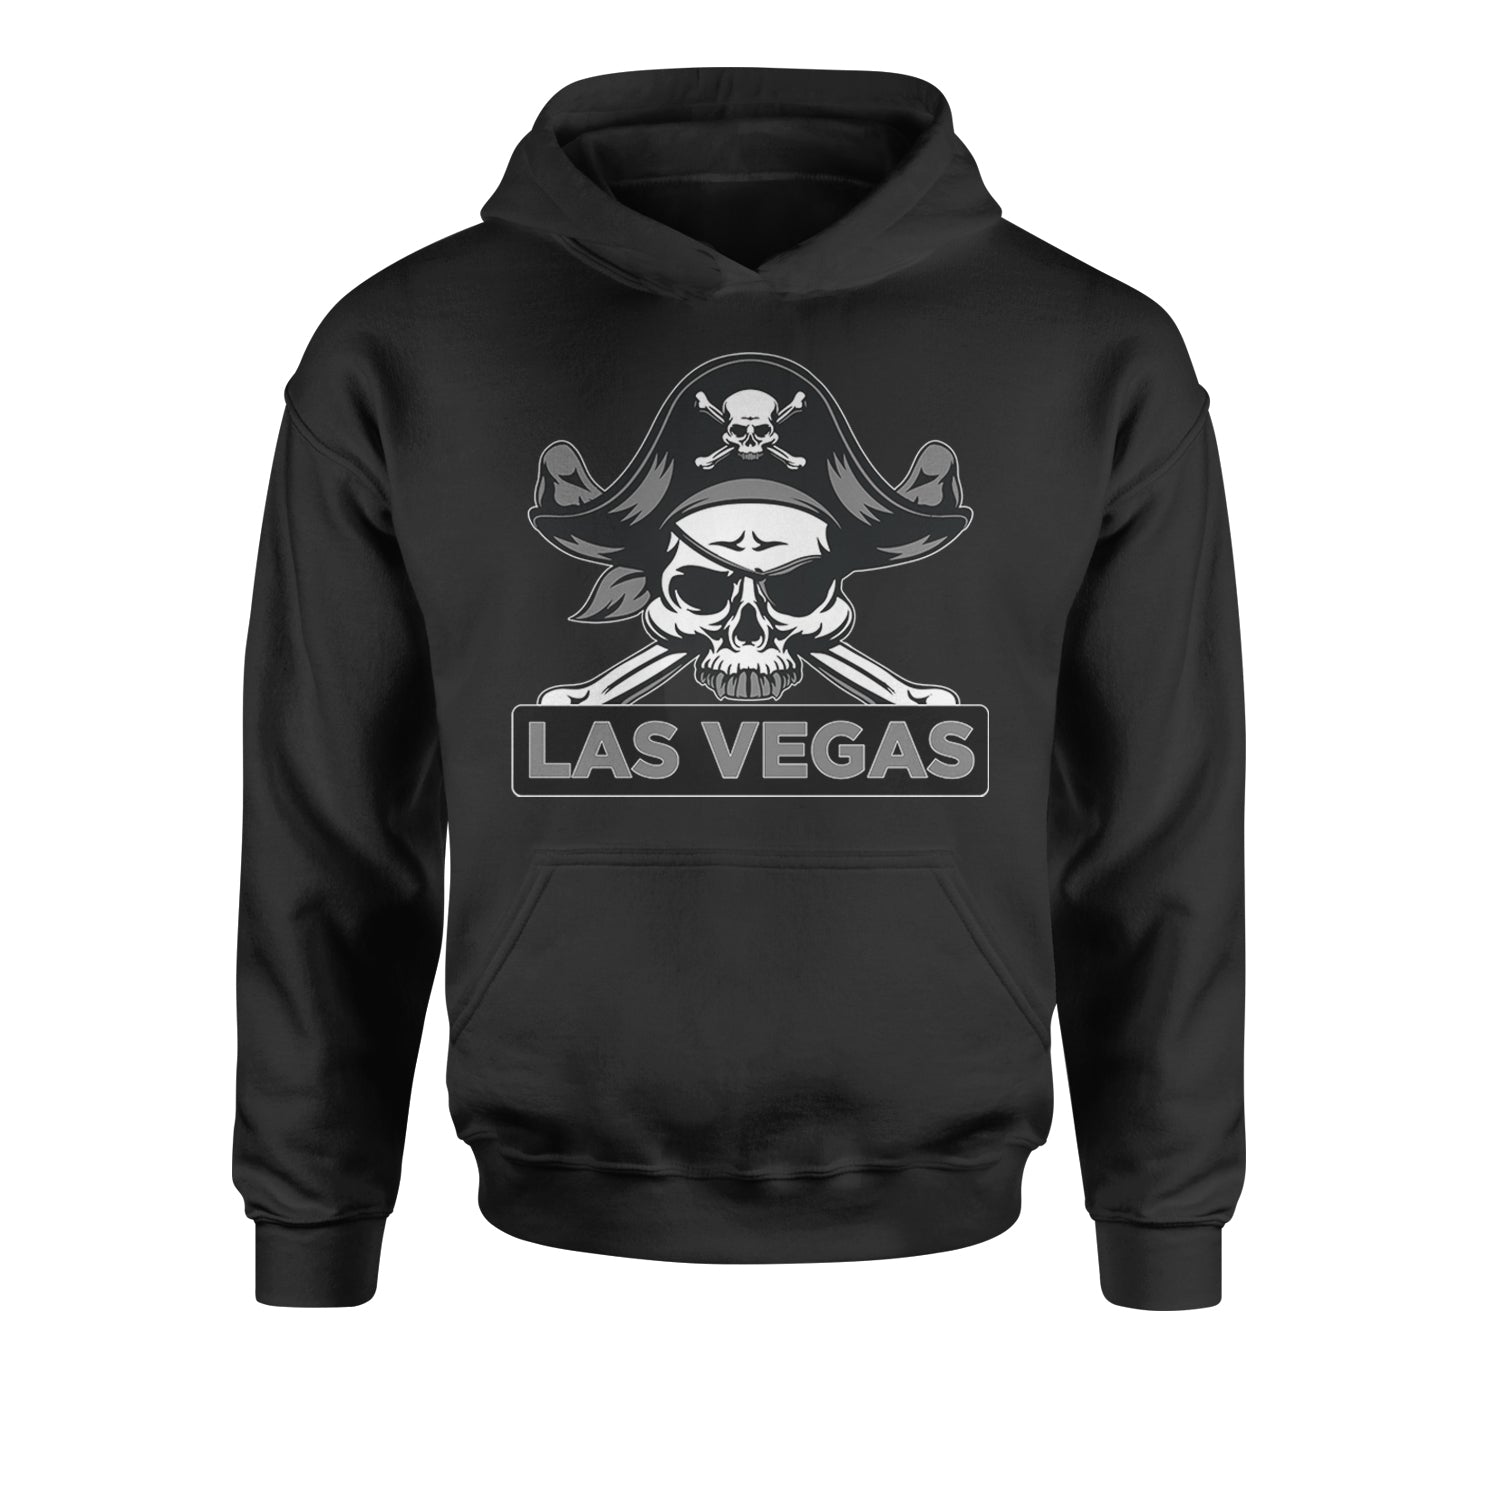 Raider Skull Straight Outta Las Vegas Youth-Sized Hoodie